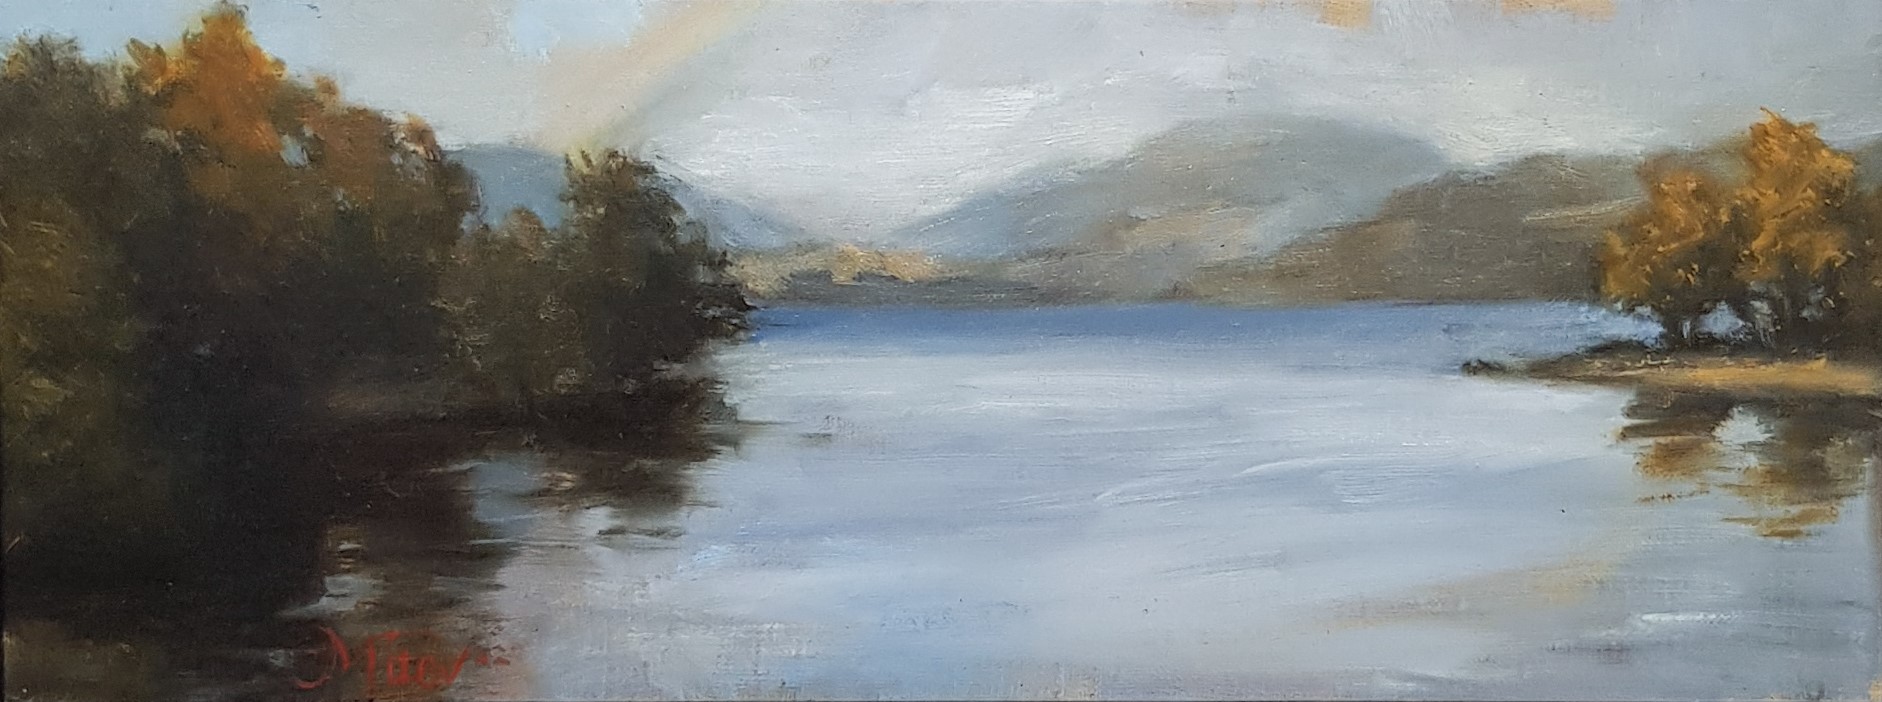 'After the Rain, Loch Lomond' by artist Angel Mitov